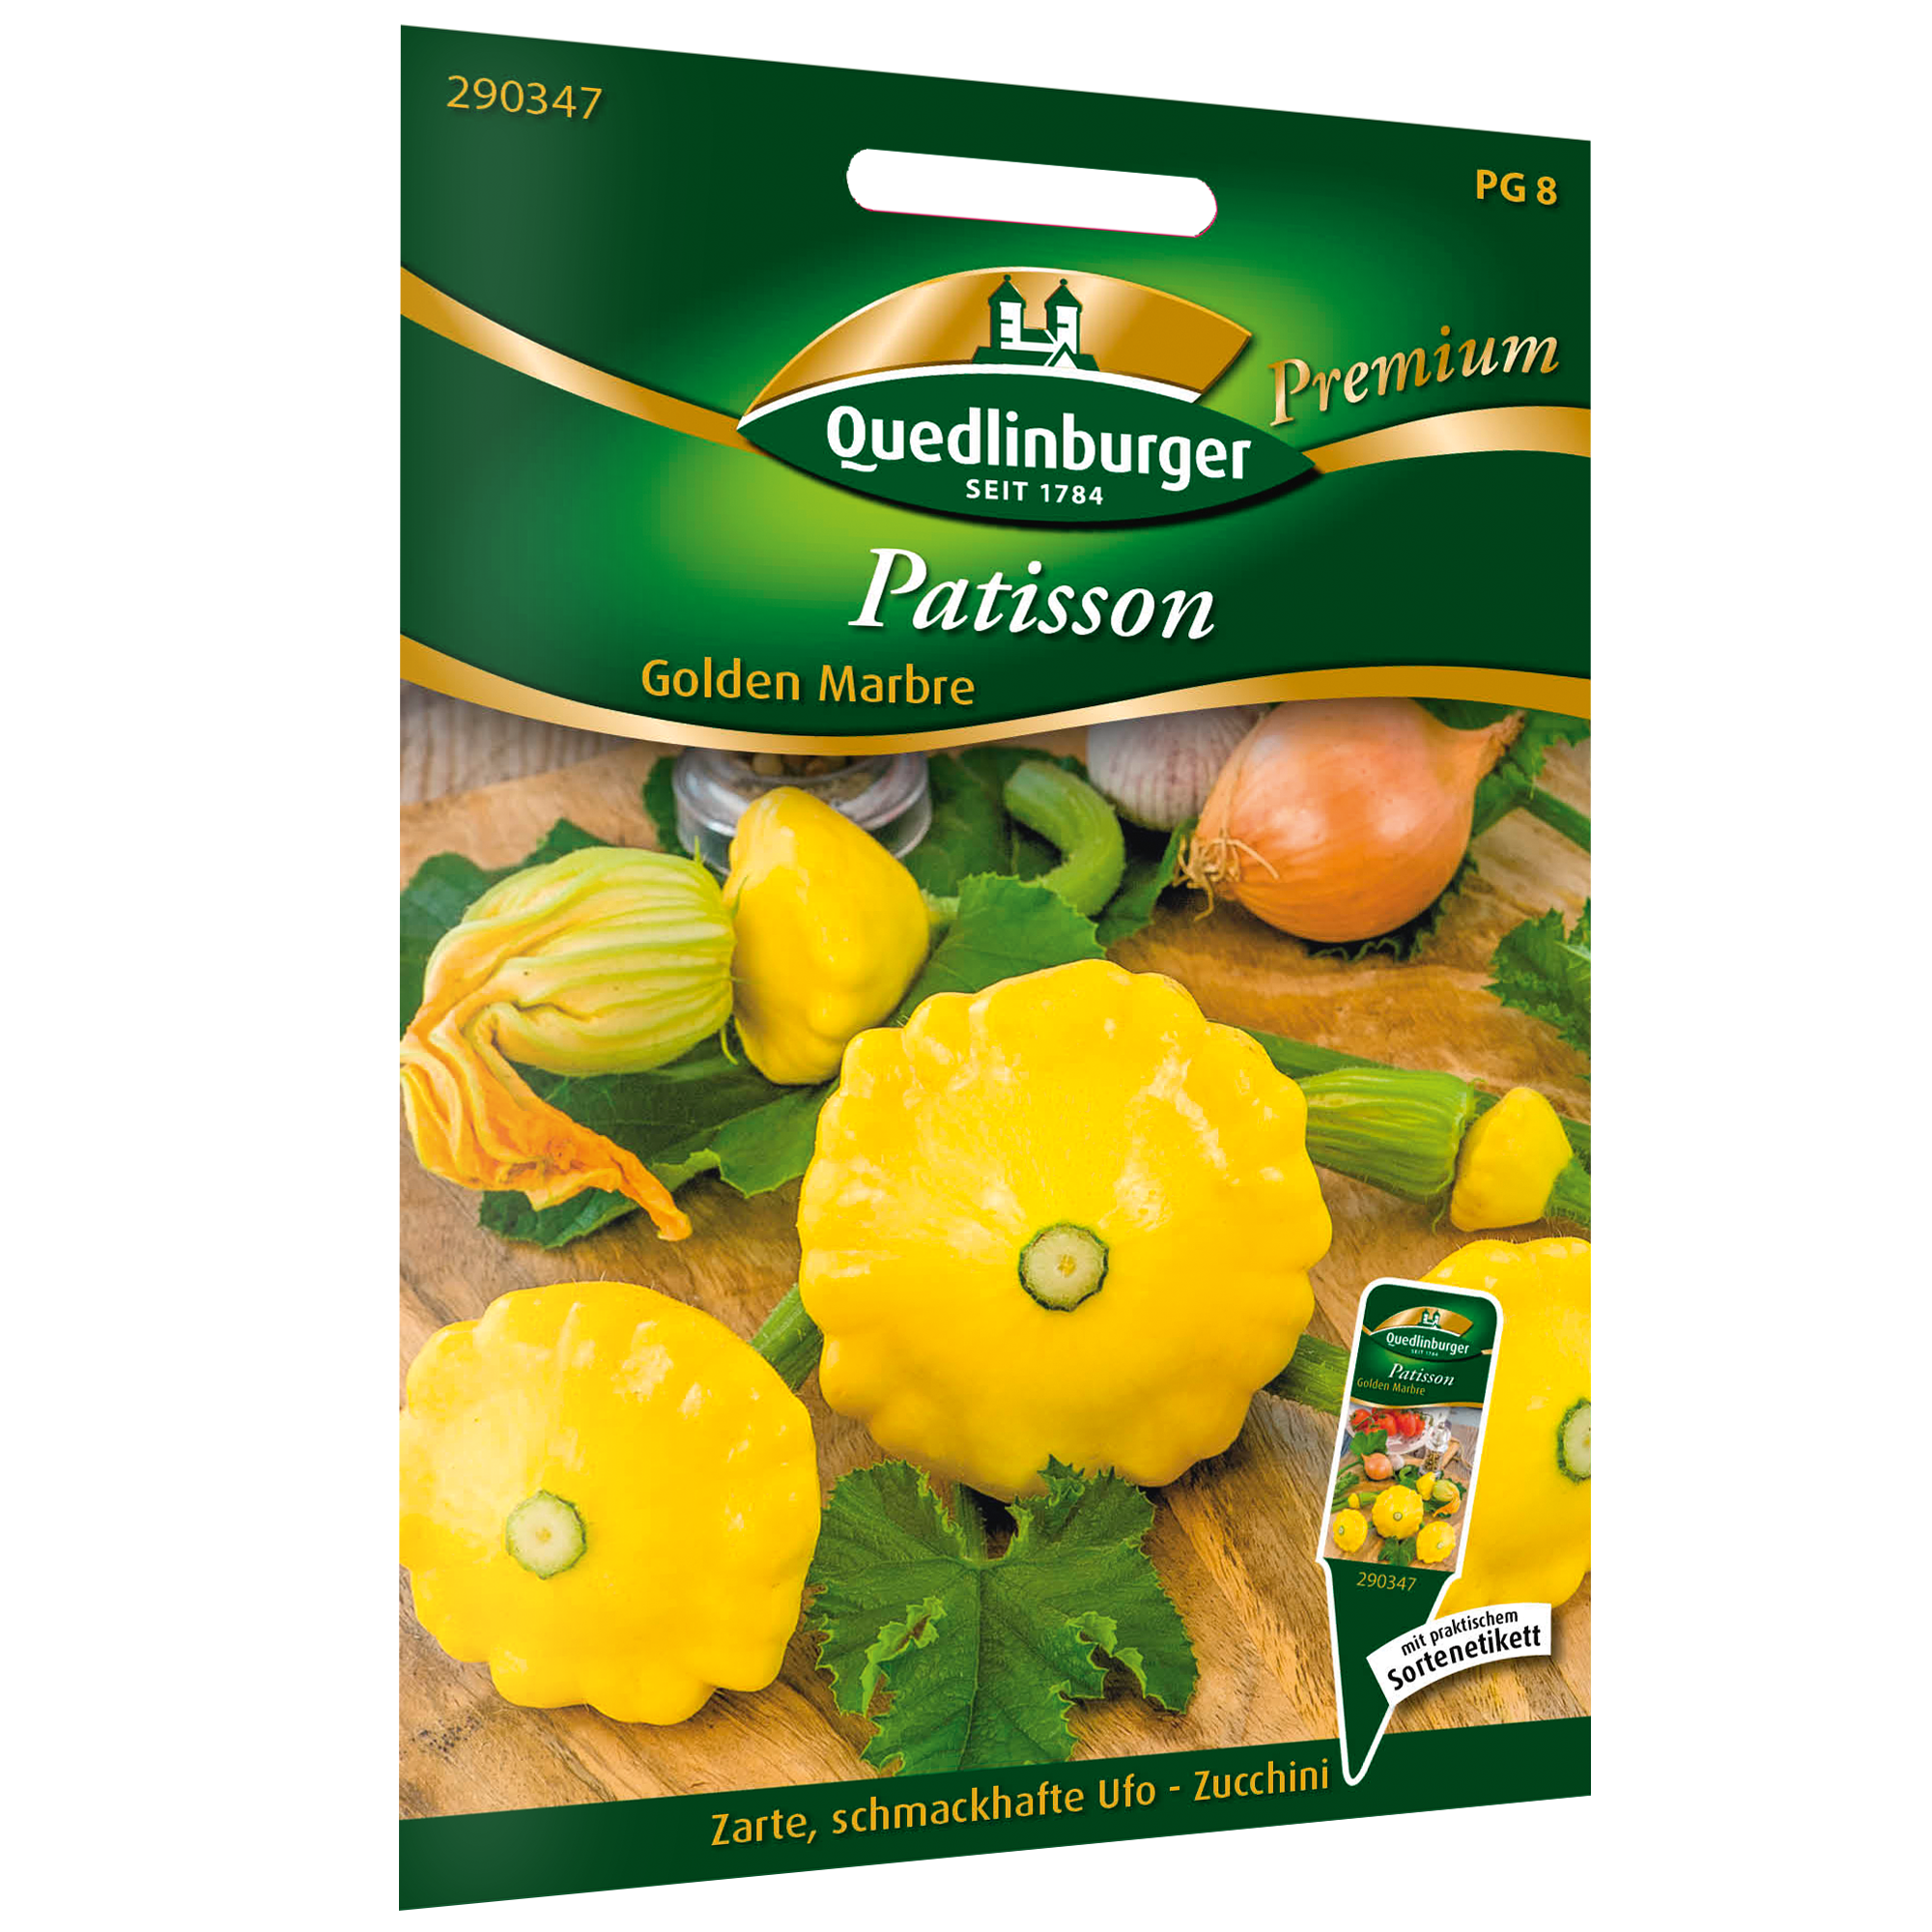 Patisson 'Golden Marbre' + product picture